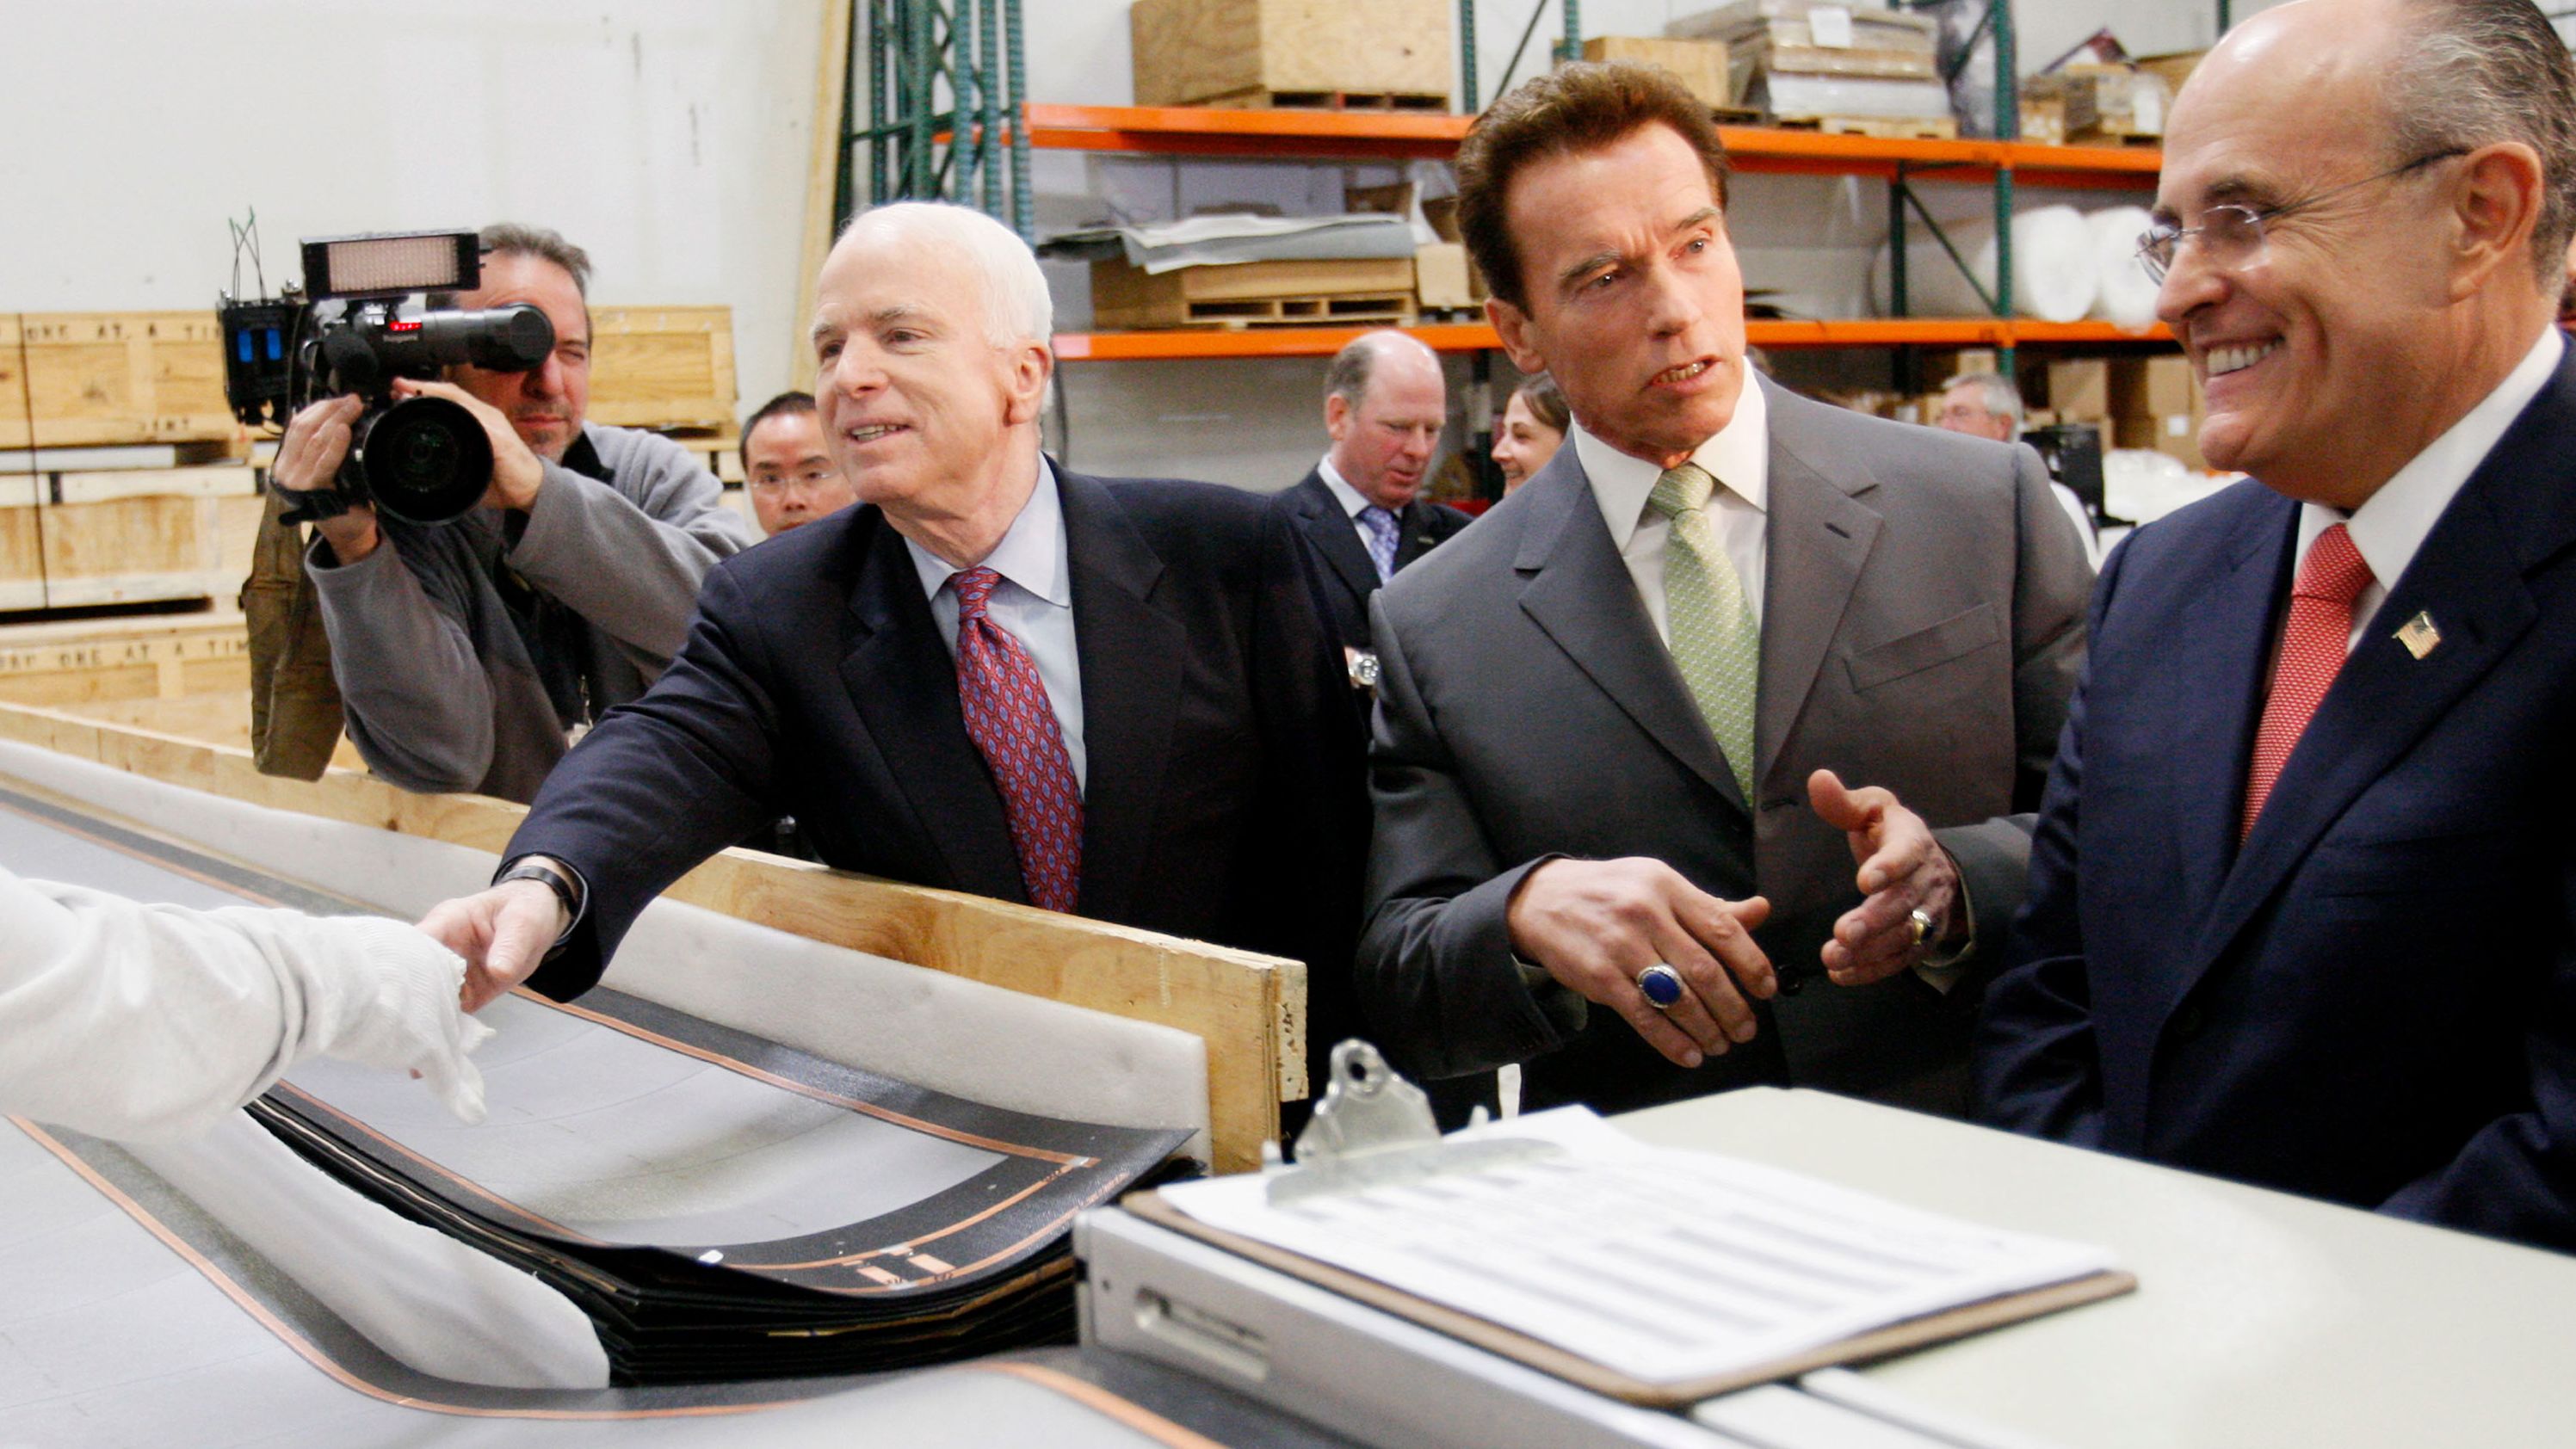 California Gov. Arnold Schwarzenegger talks to Giuliani as Giuliani and McCain tour a solar panel manufacturer in Los Angeles in January 2008.